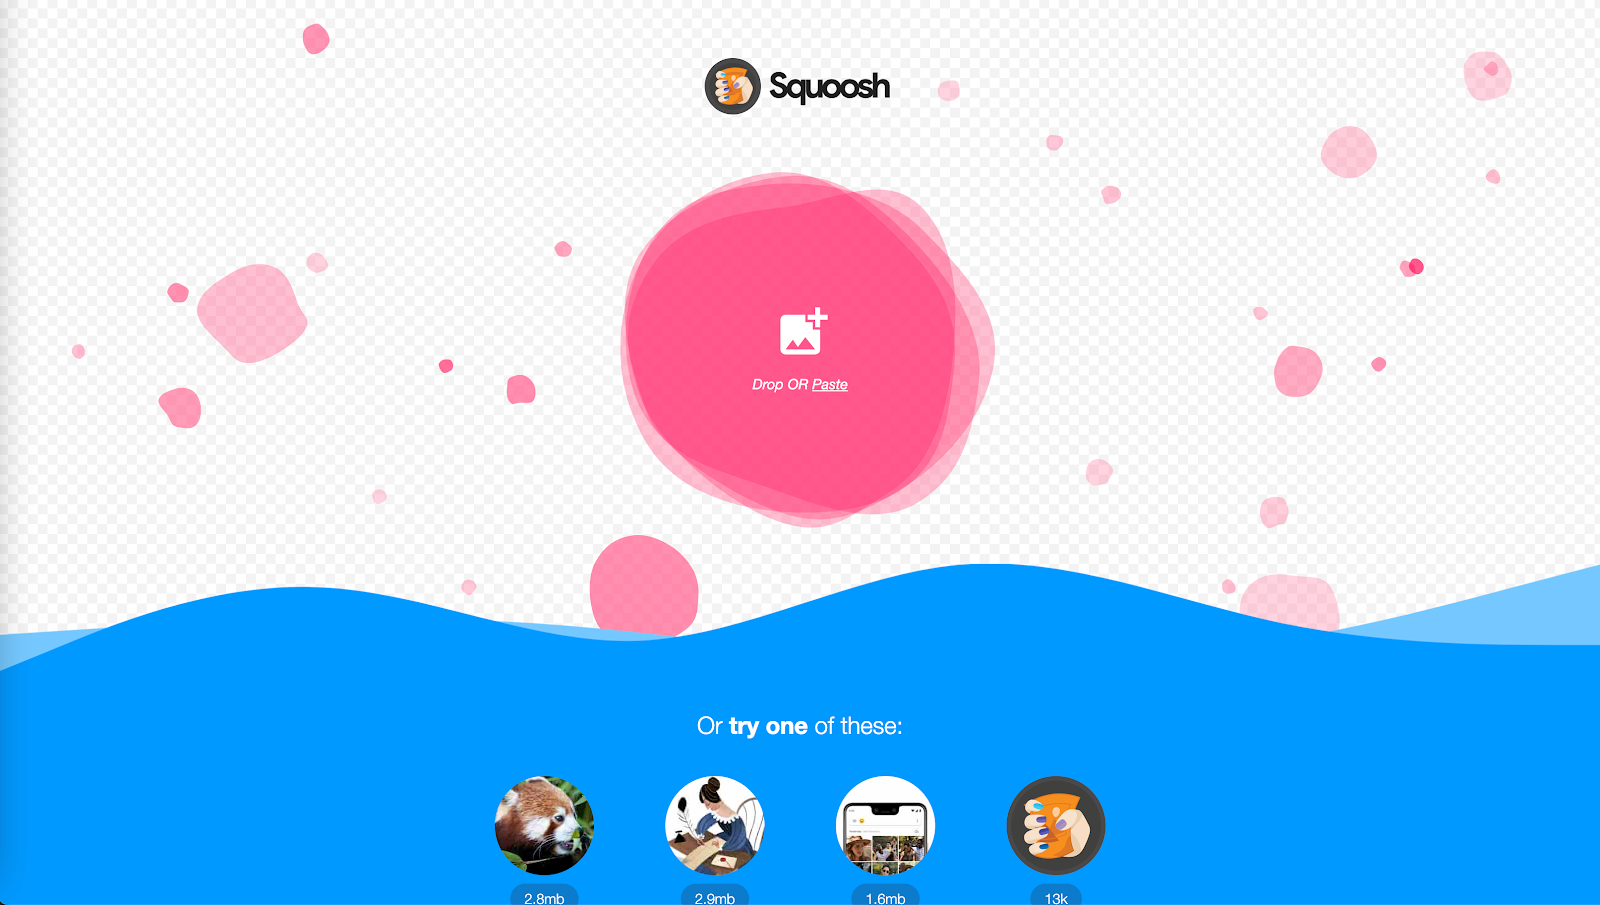 Squoosh main screen when you visit the squoosh.app site